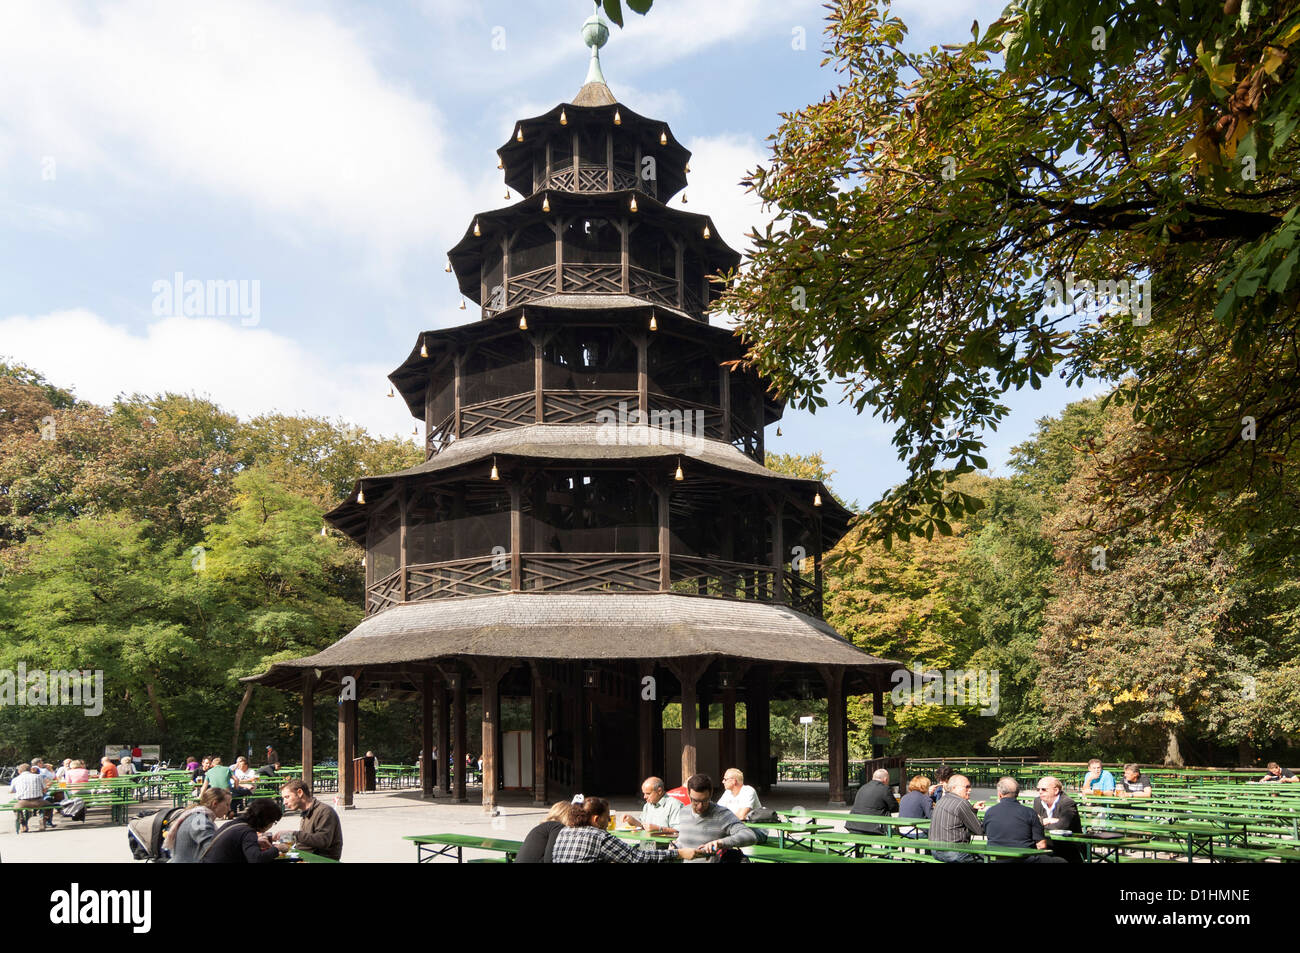 Chinesischer Turm mit Biergarten in Englischer Garten Monaco di Baviera, Germania Foto Stock